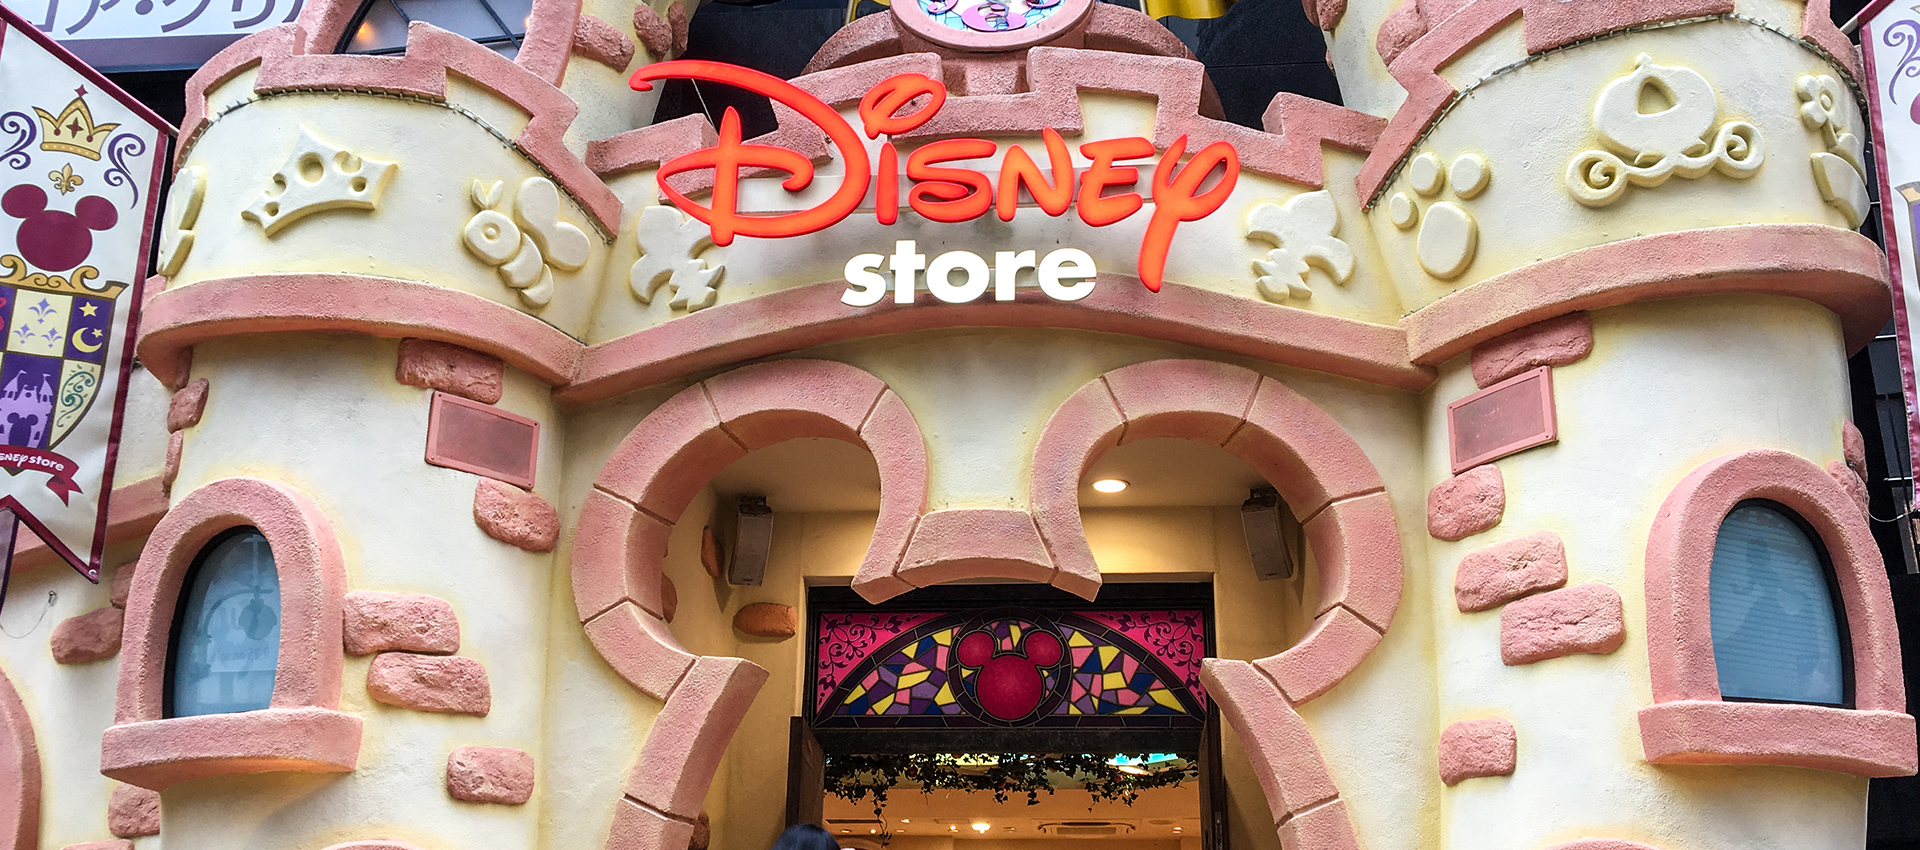 Enter a Magical Wonderland at the Shibuya Disney Store - Japan Journeys